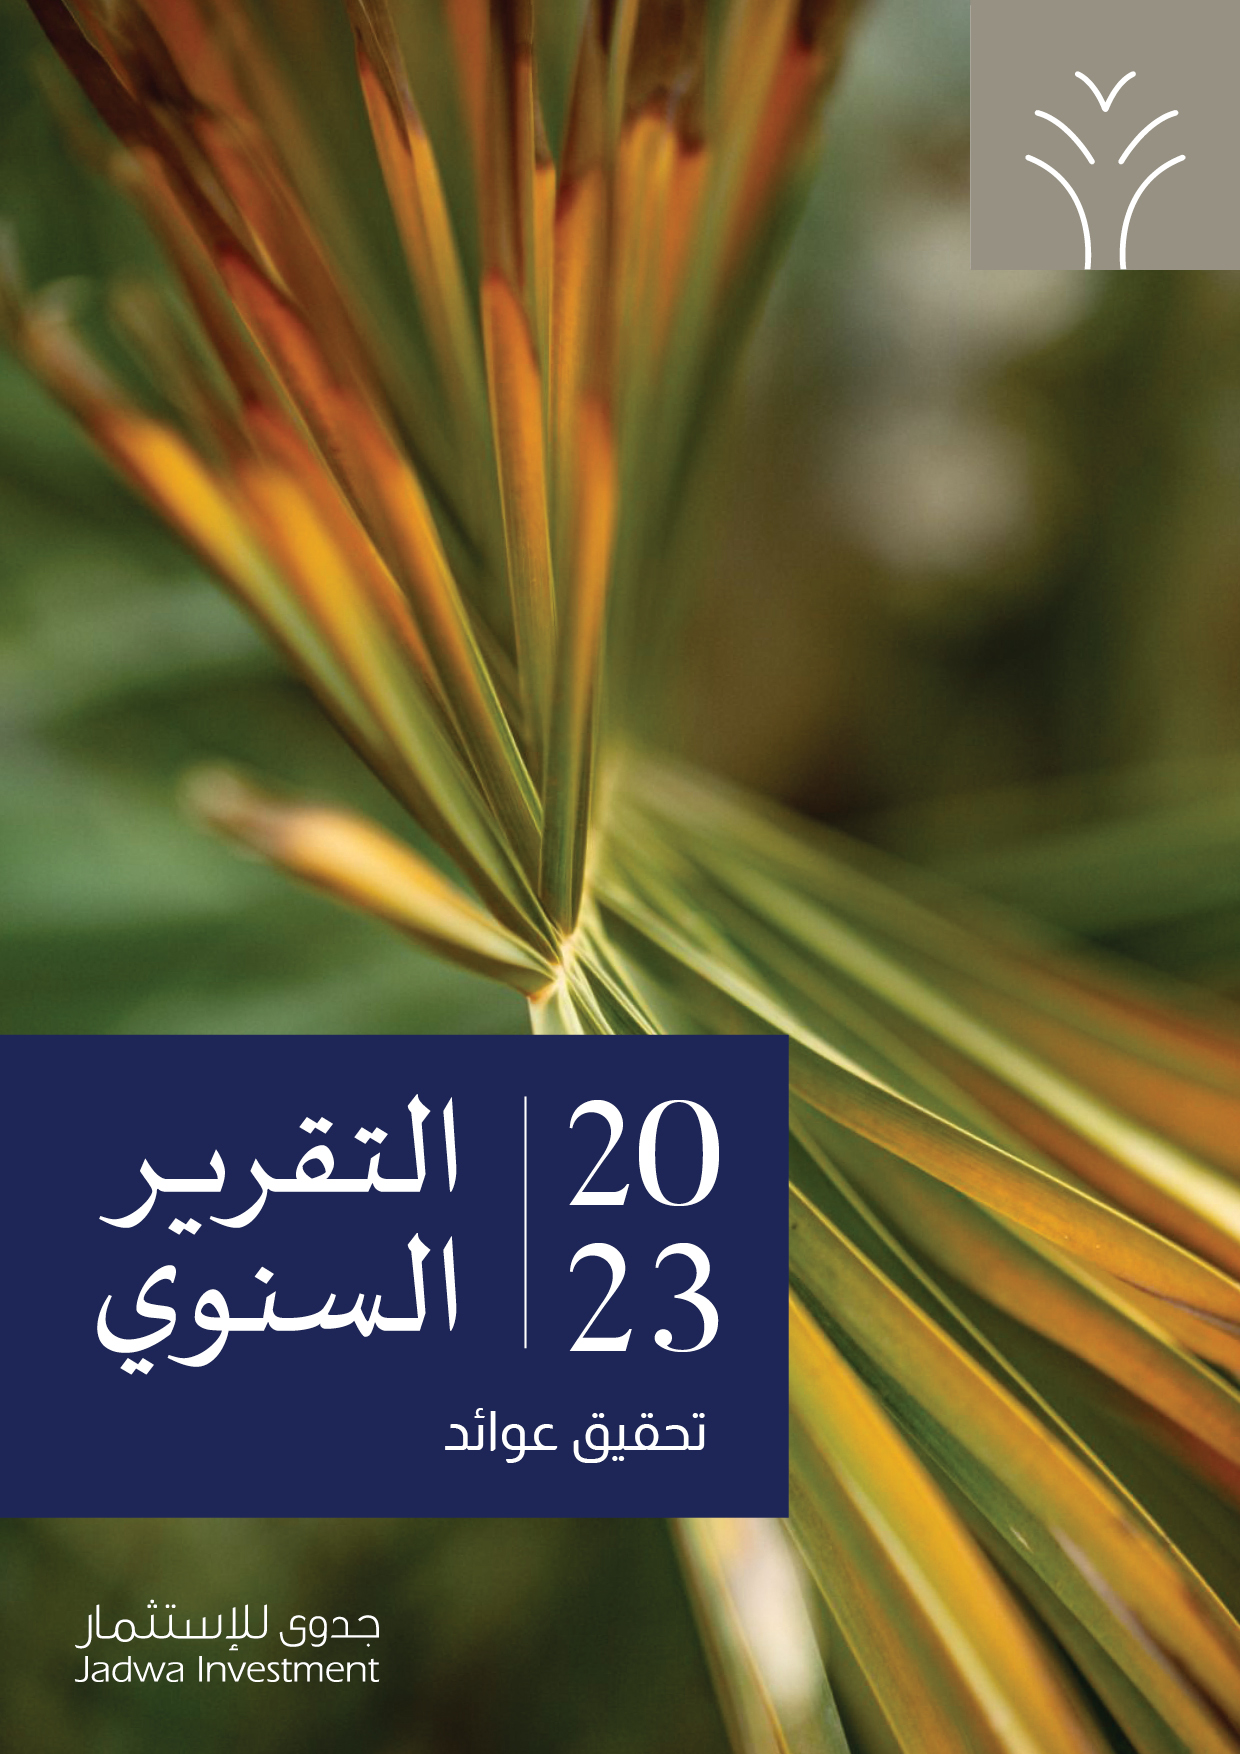 annual-report-cover